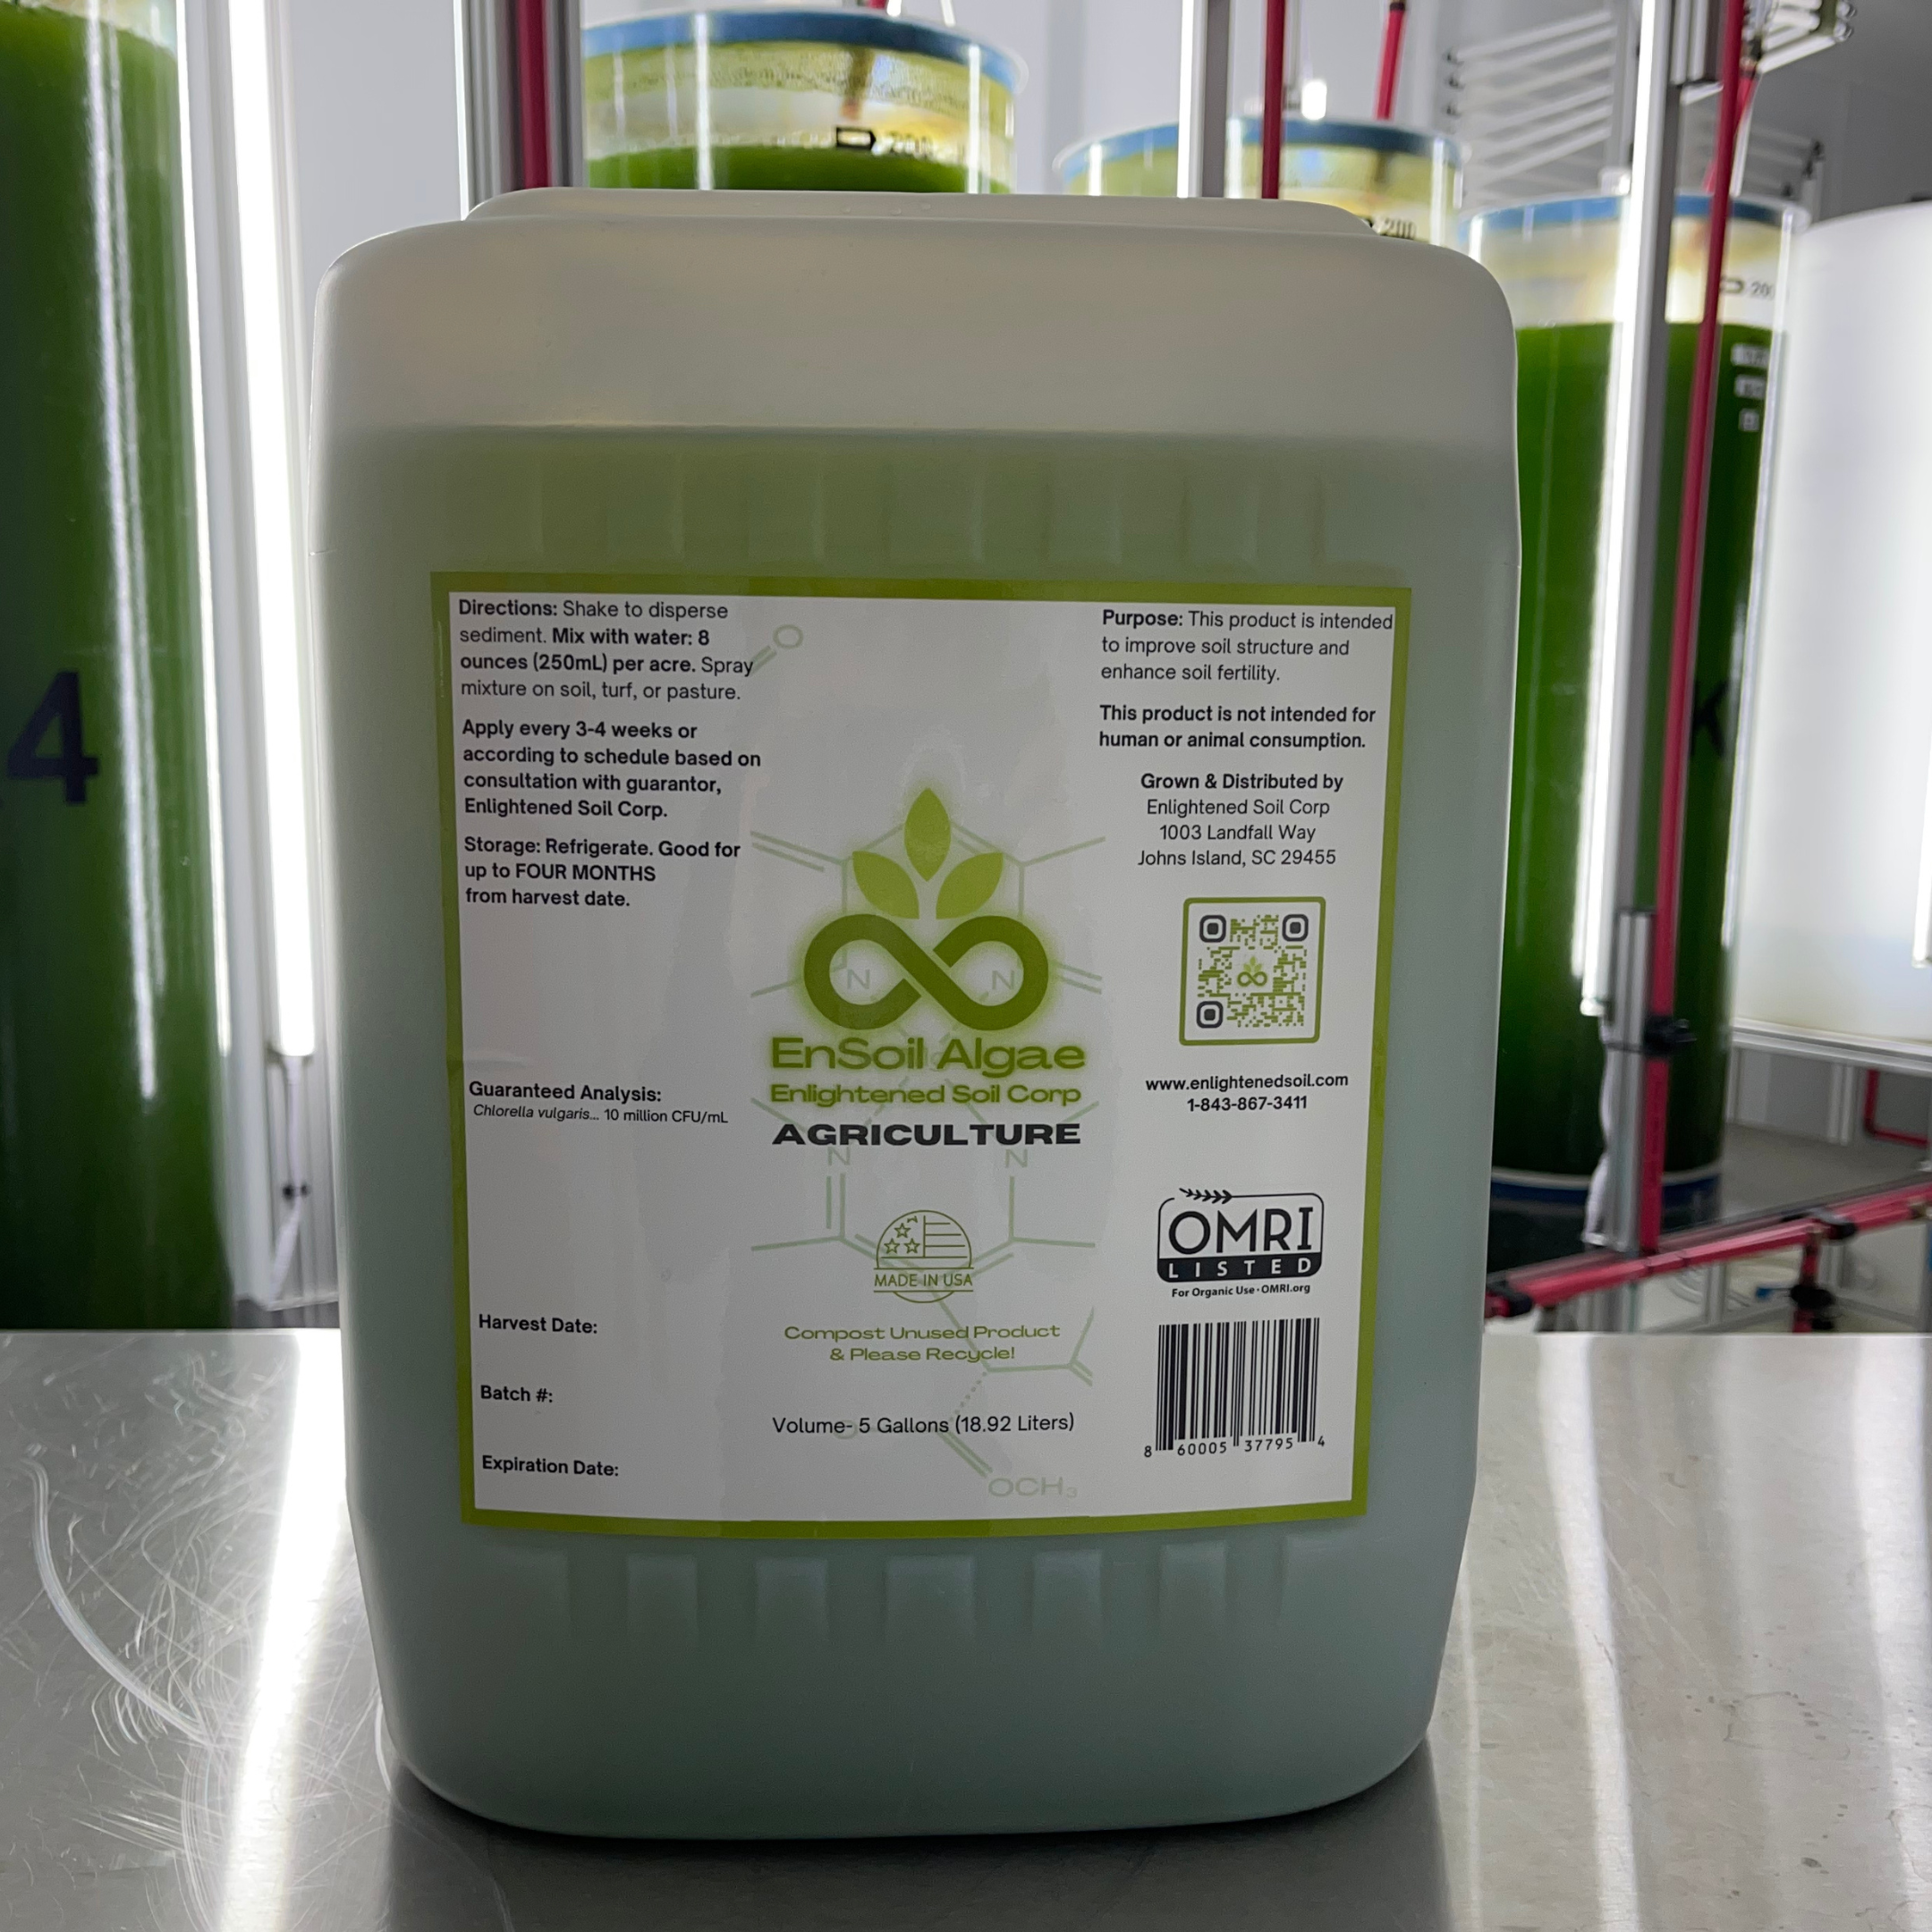 En-Soil Algae 5 Gallon Jerrycan for Agriculture (R)